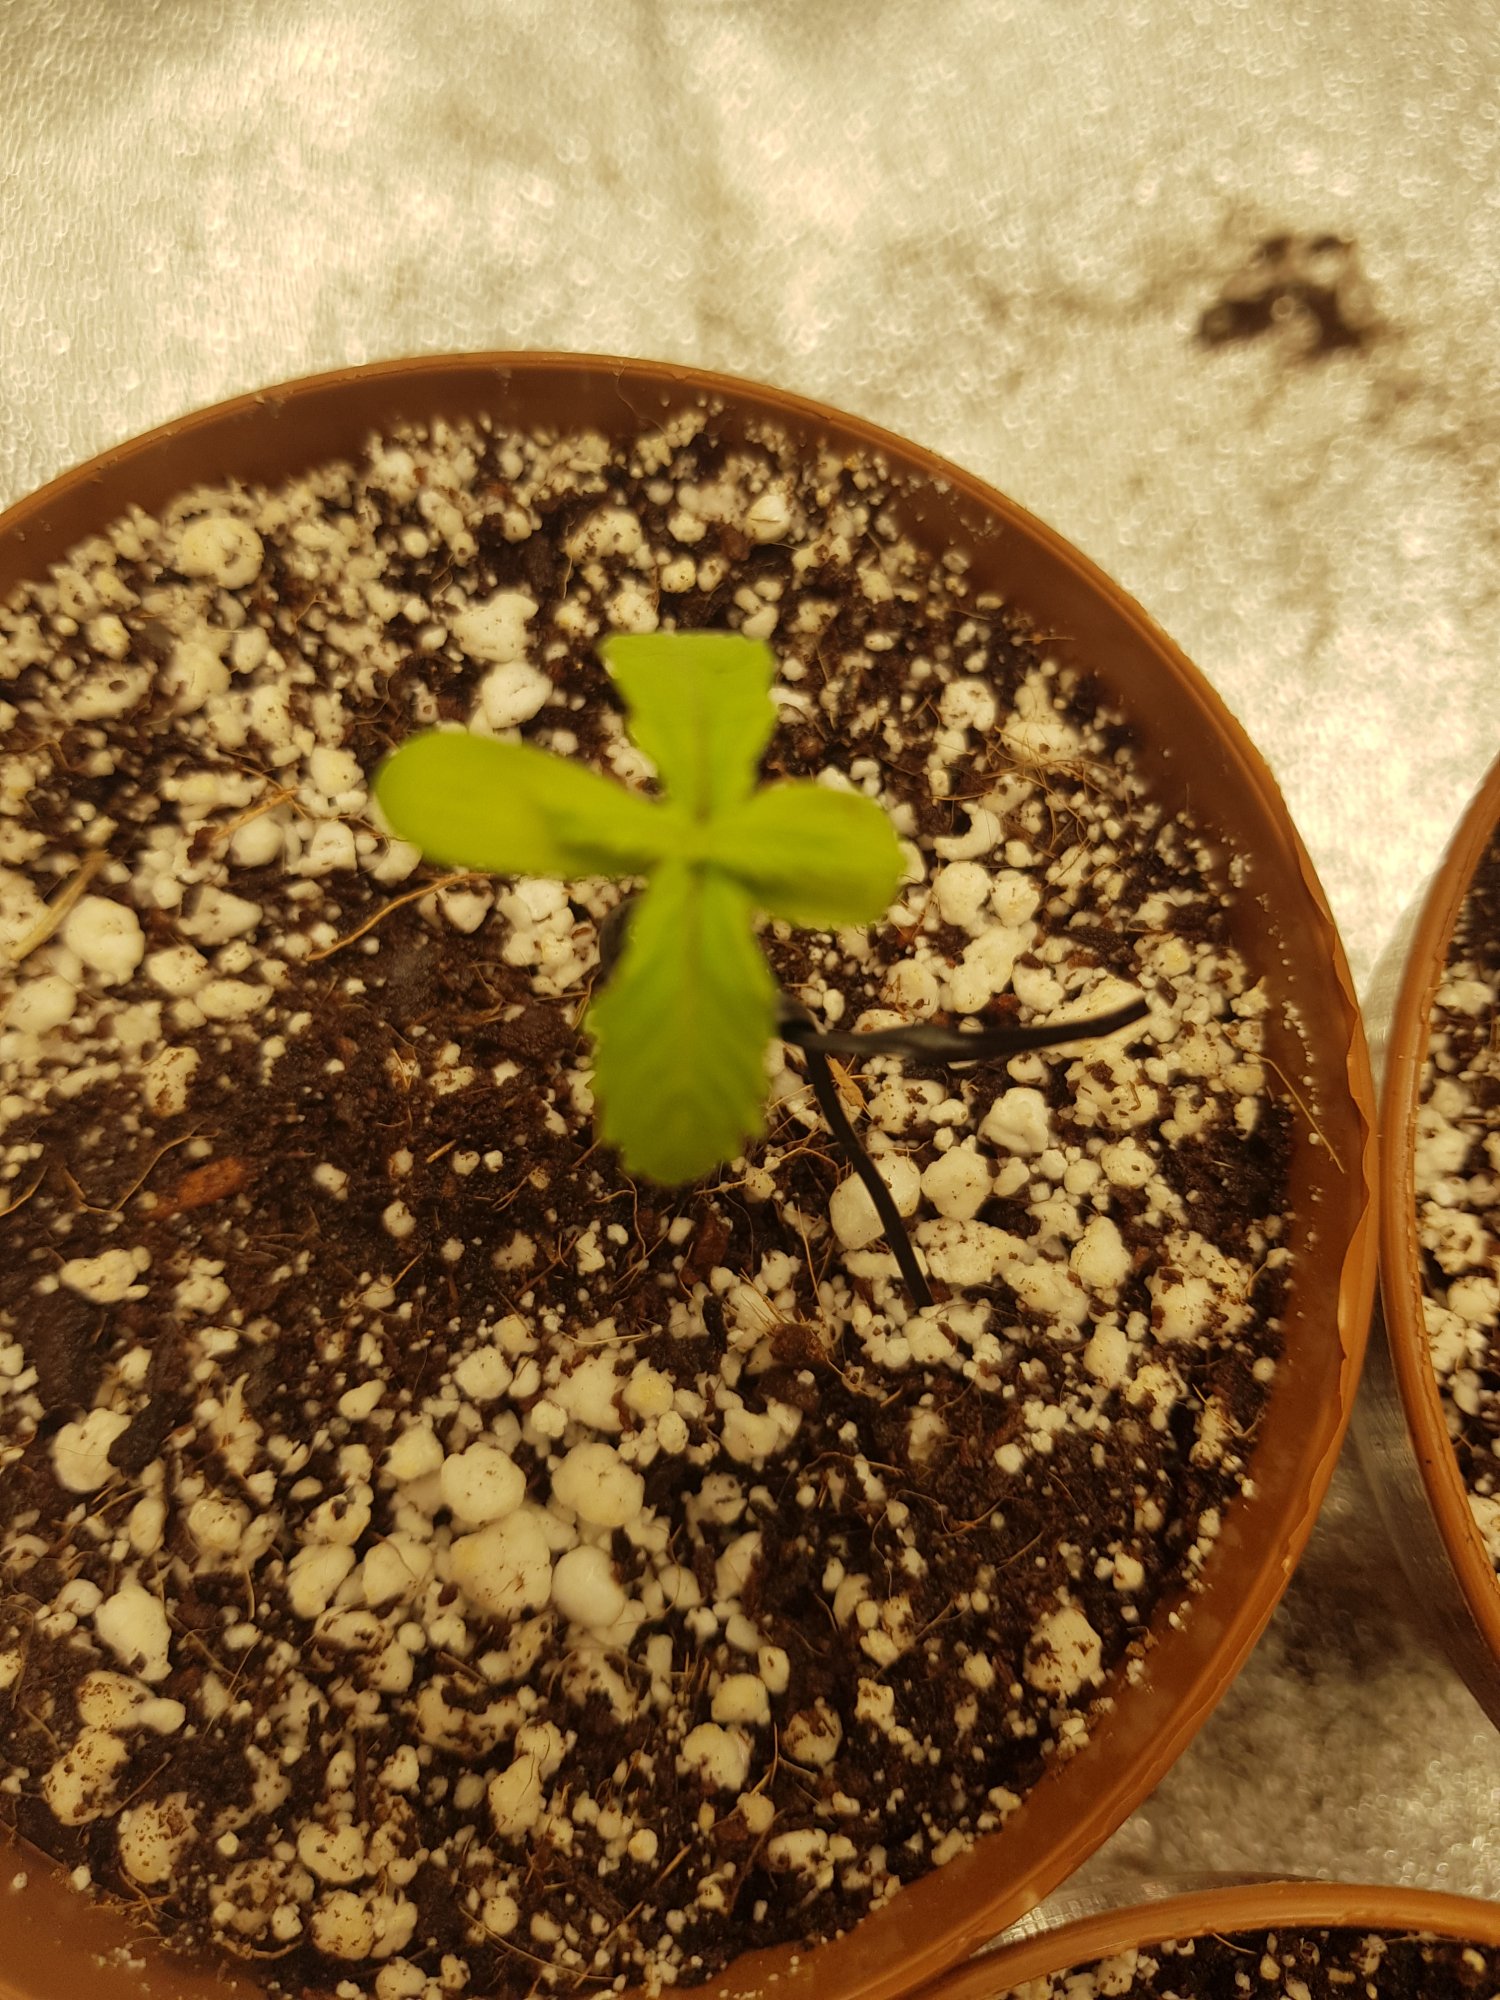 Need help with seedlings please 3